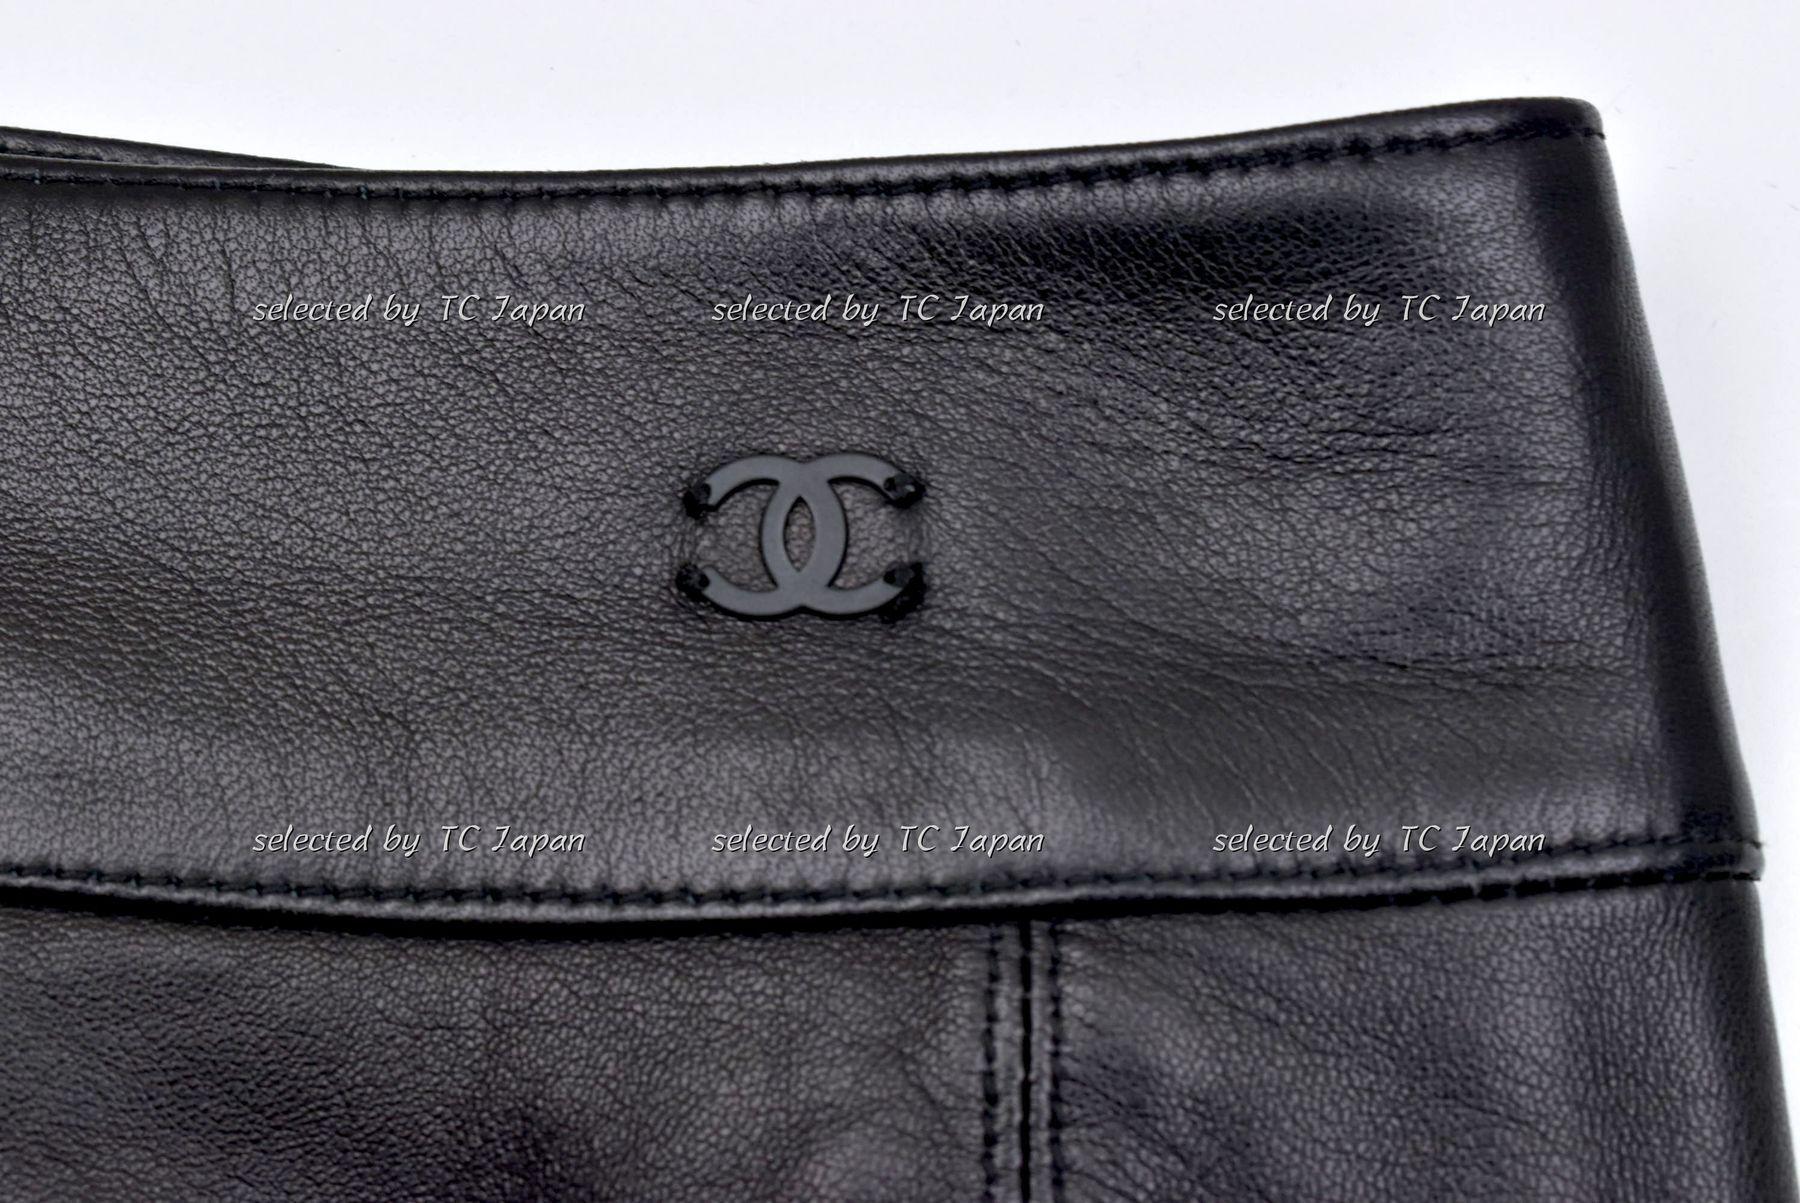 Chanel 04PF Keira Knightley Black Lambskin Leather Jacket Skirt 36 38 シャネル キーラ・ナイトレイ着用ラムレザー・ジャケット・スカート 即発 - CHANEL TC JAPAN